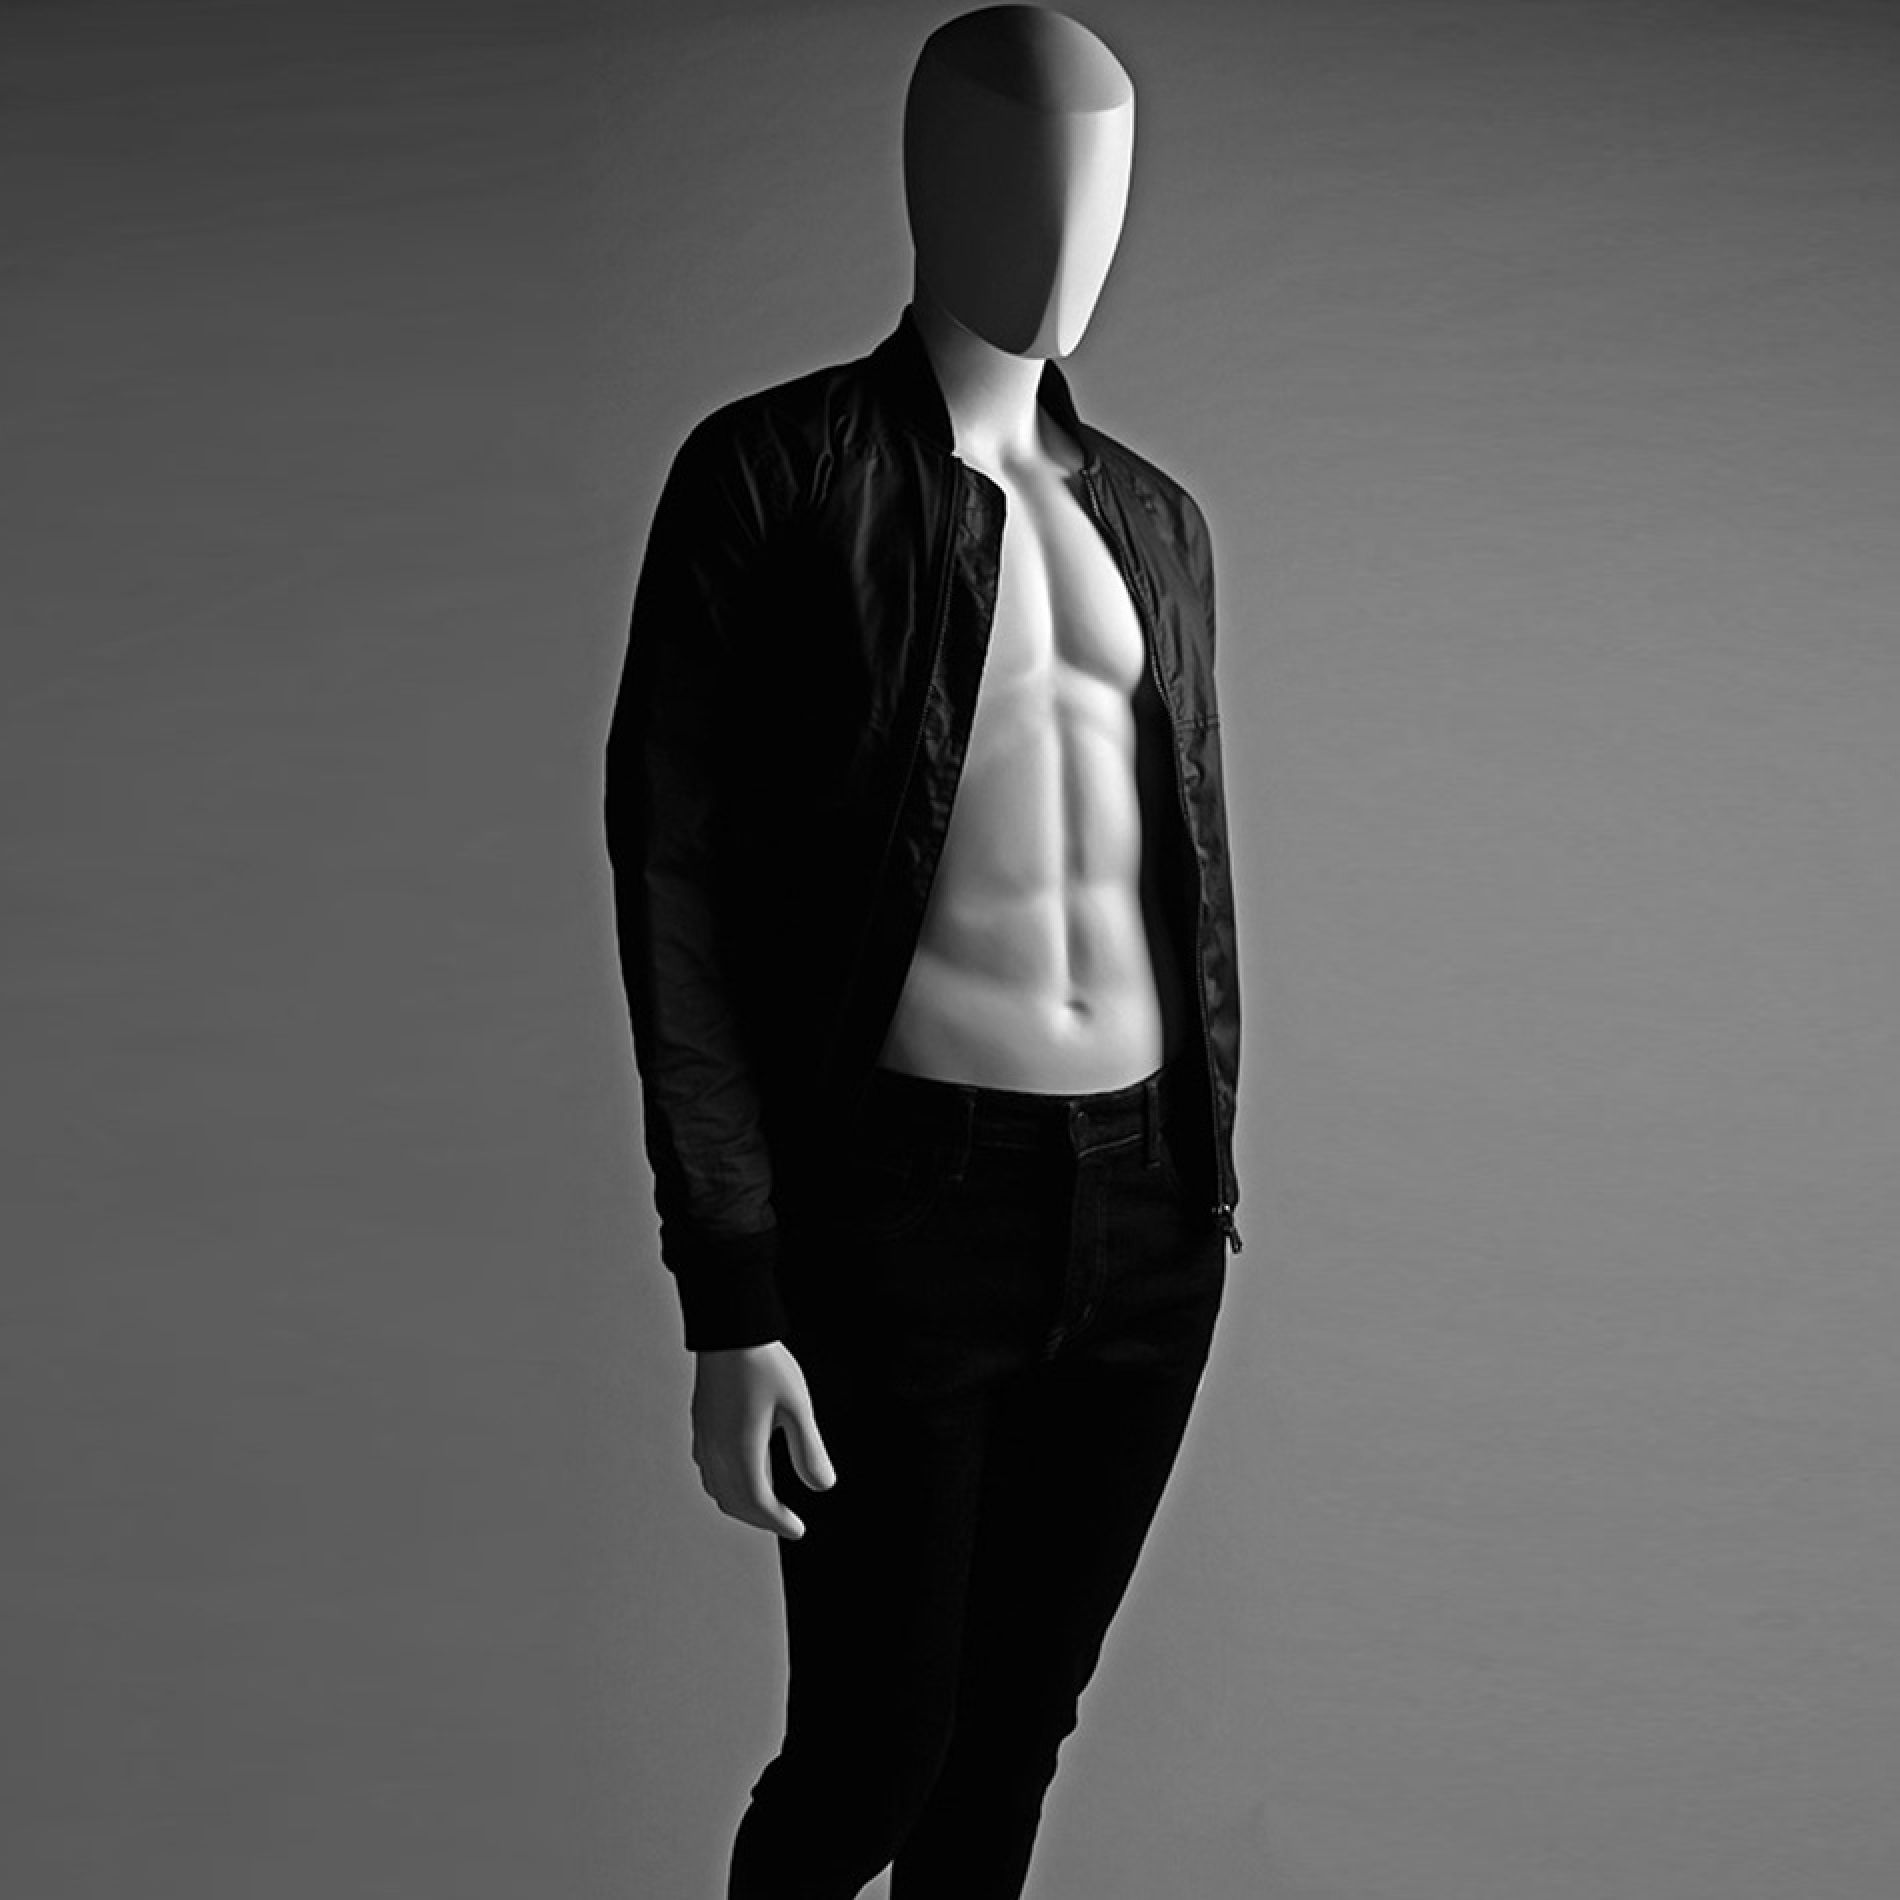 Profile Man 2 Gallery Image